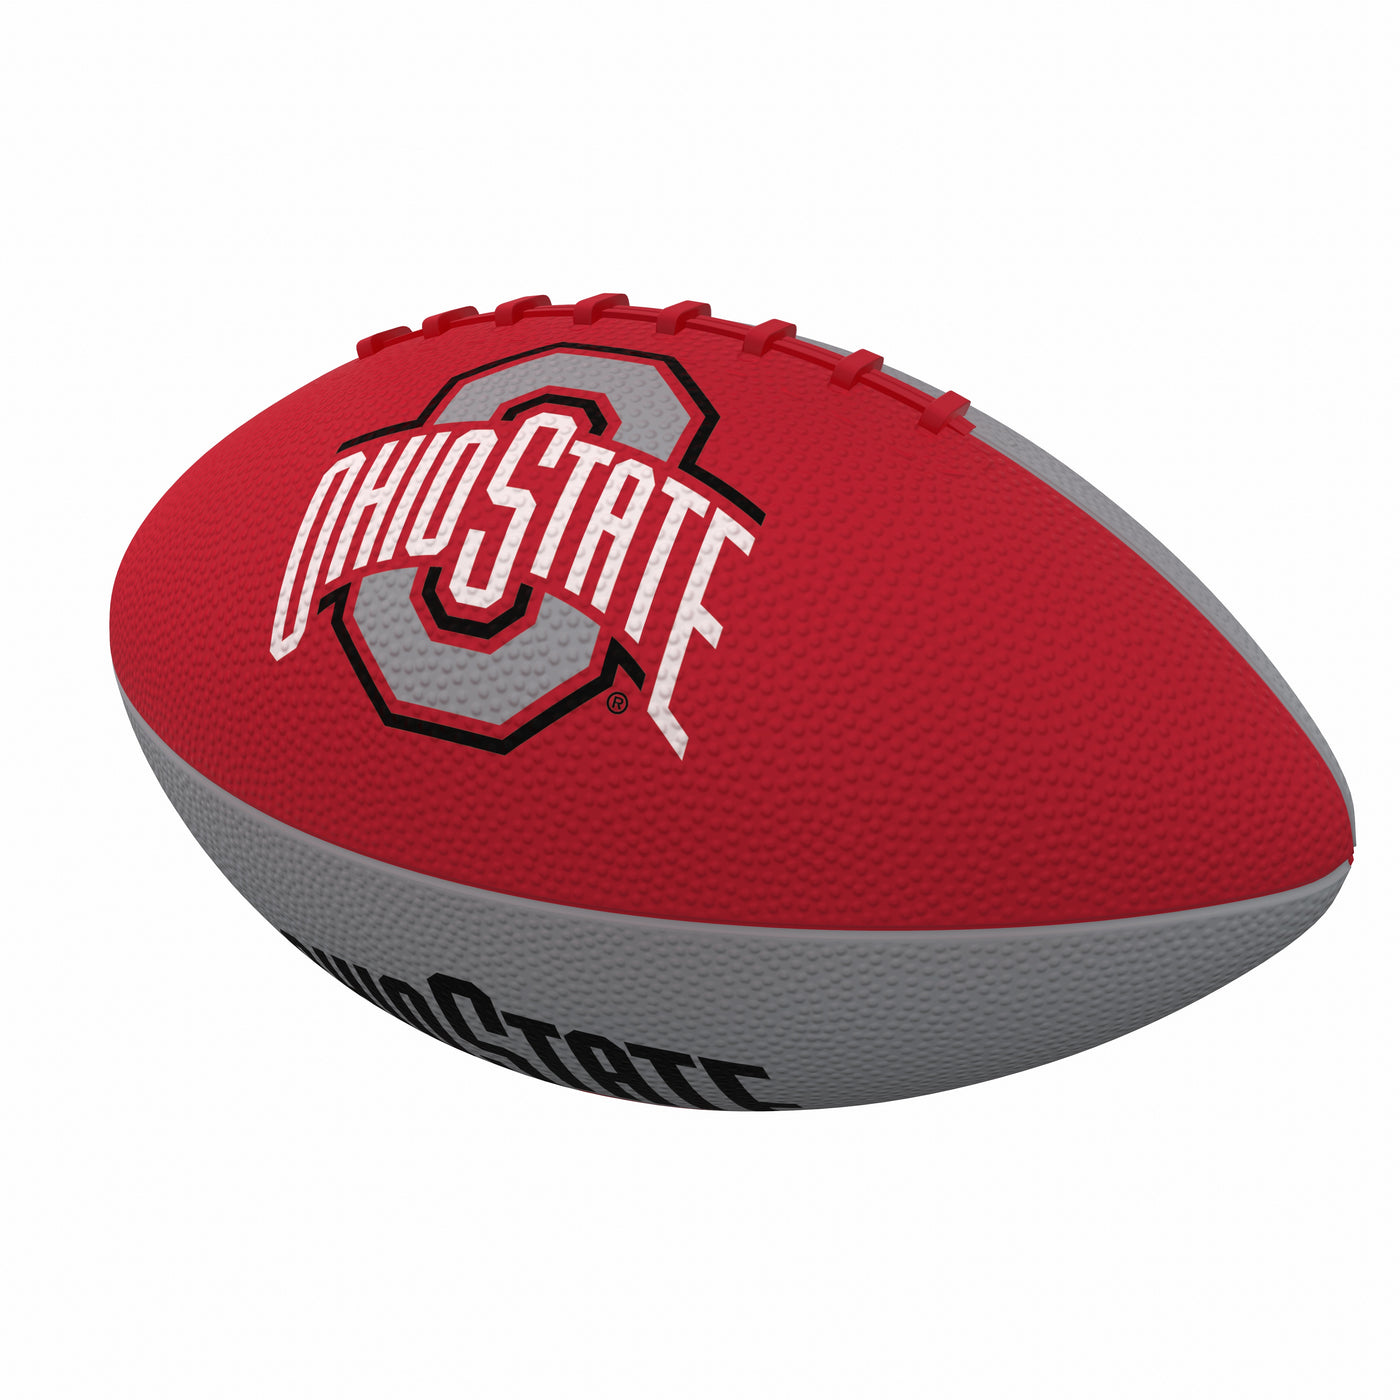 Ohio State Pinwheel Logo Junior Size Rubber Football